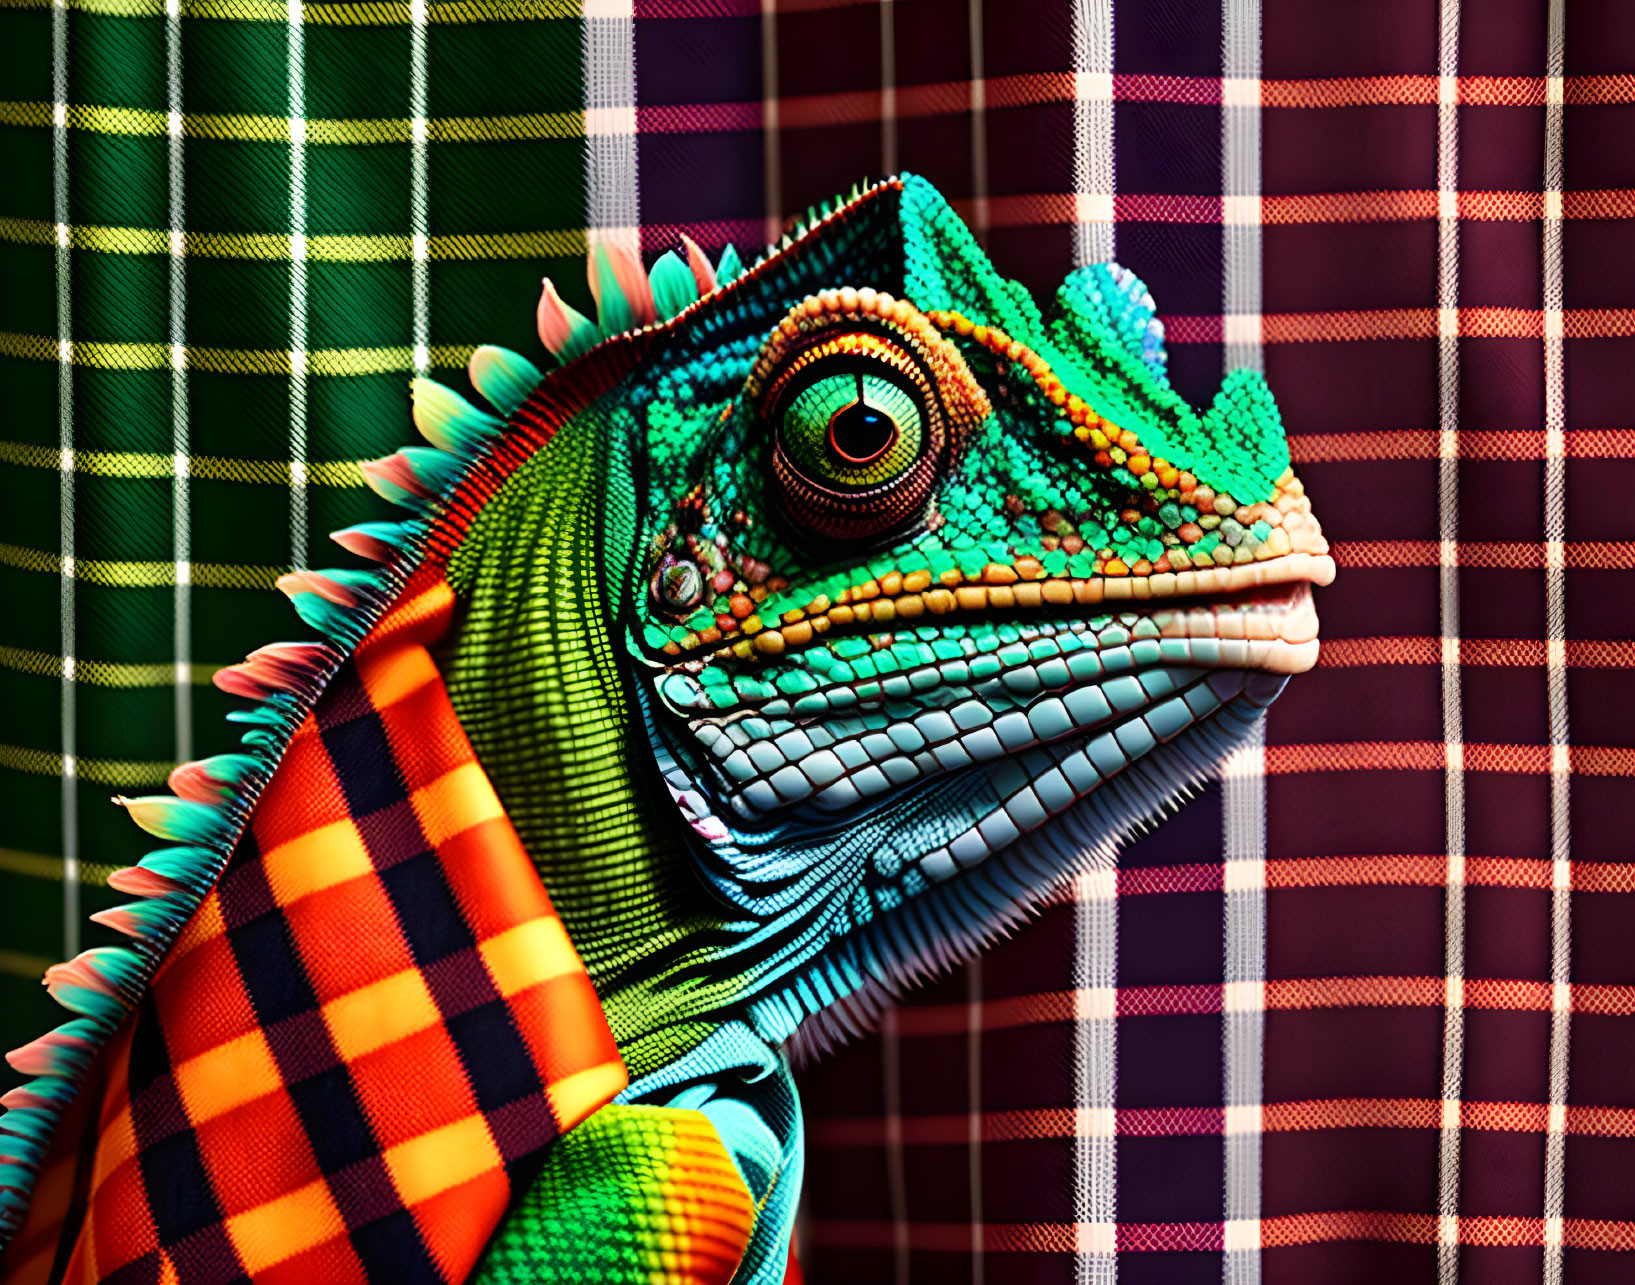 Colorful Chameleon Close-Up on Tartan Background